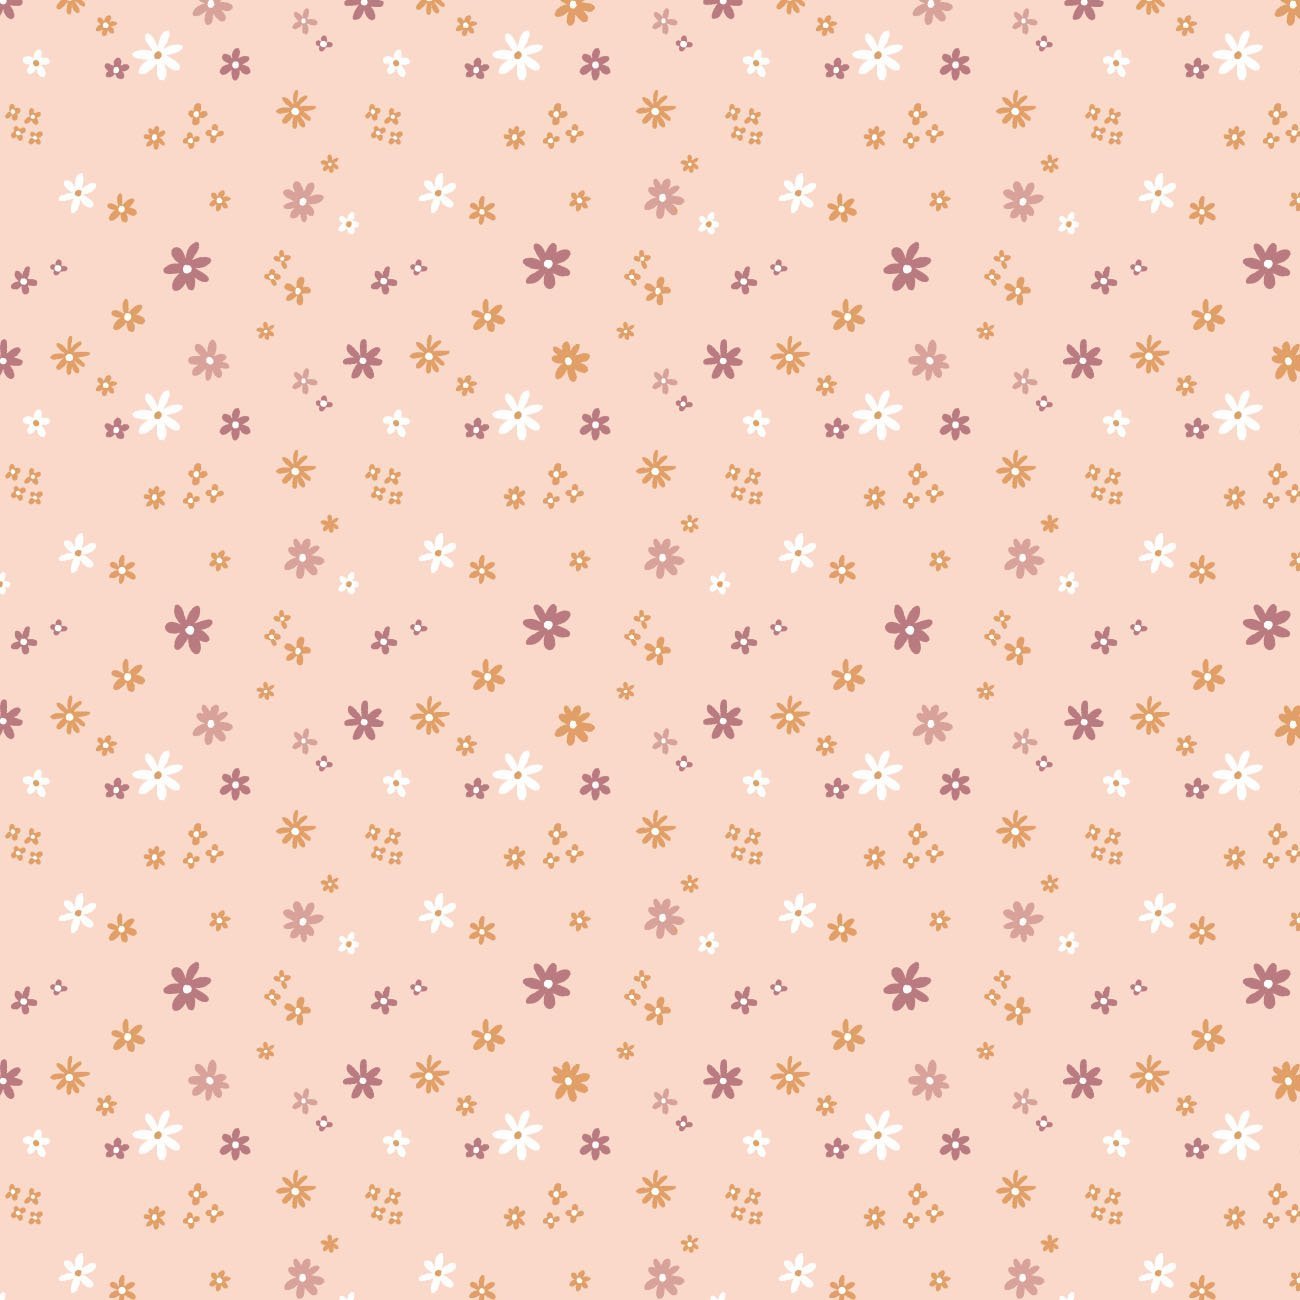 Smitten Kittens - Serene Flowers on Pink